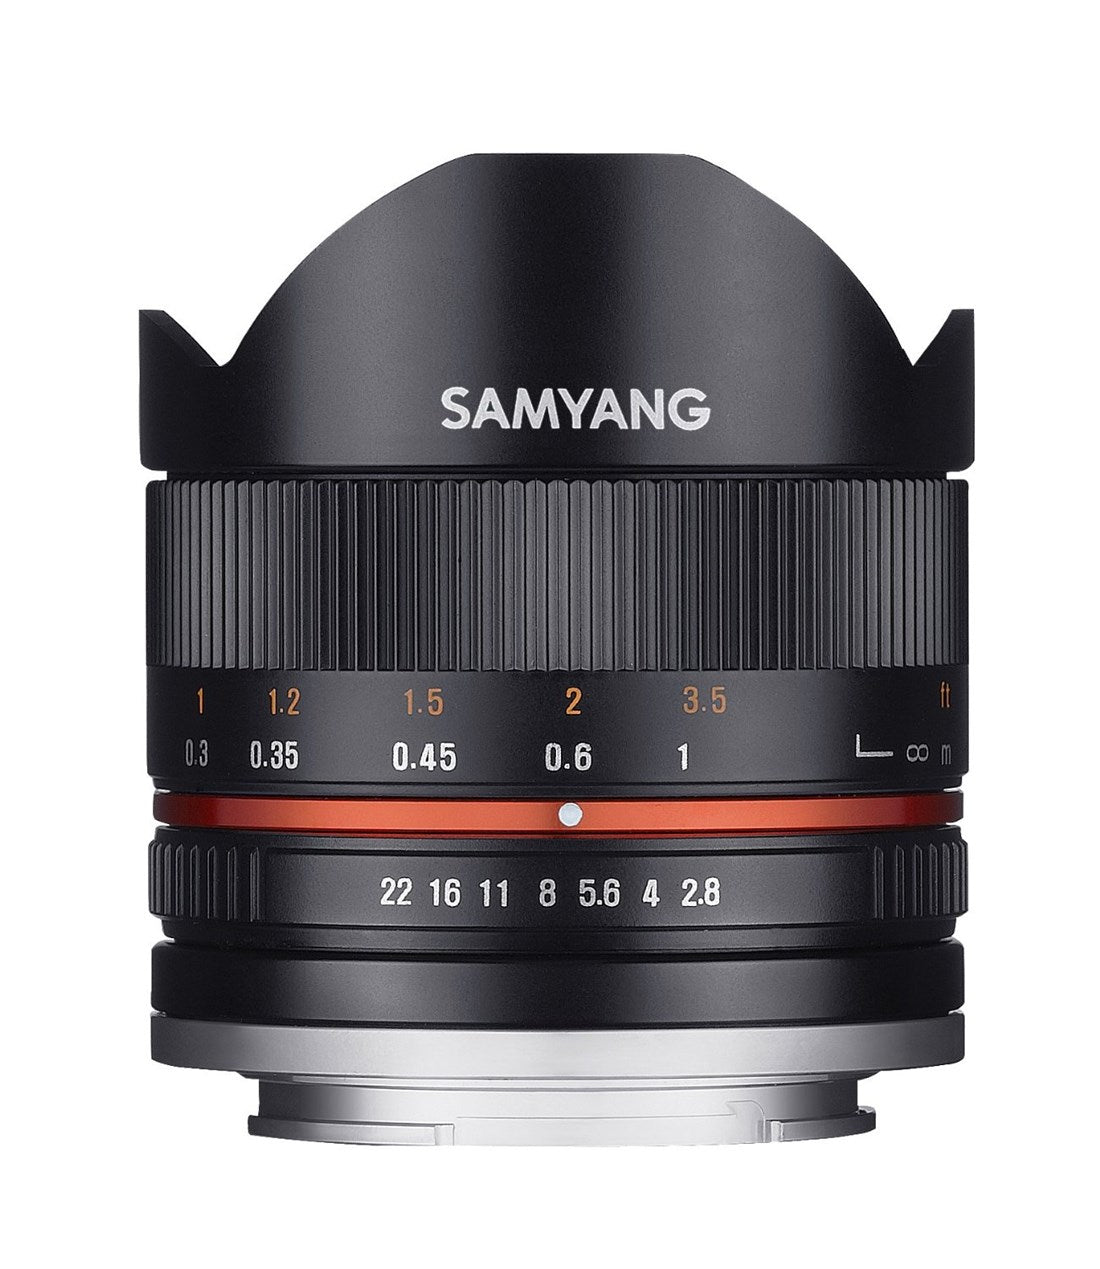 Product Image of Samyang 8mm f2.8 Aspherical IF MC Fisheye CS II Lens - Black Fuji X mount Fit